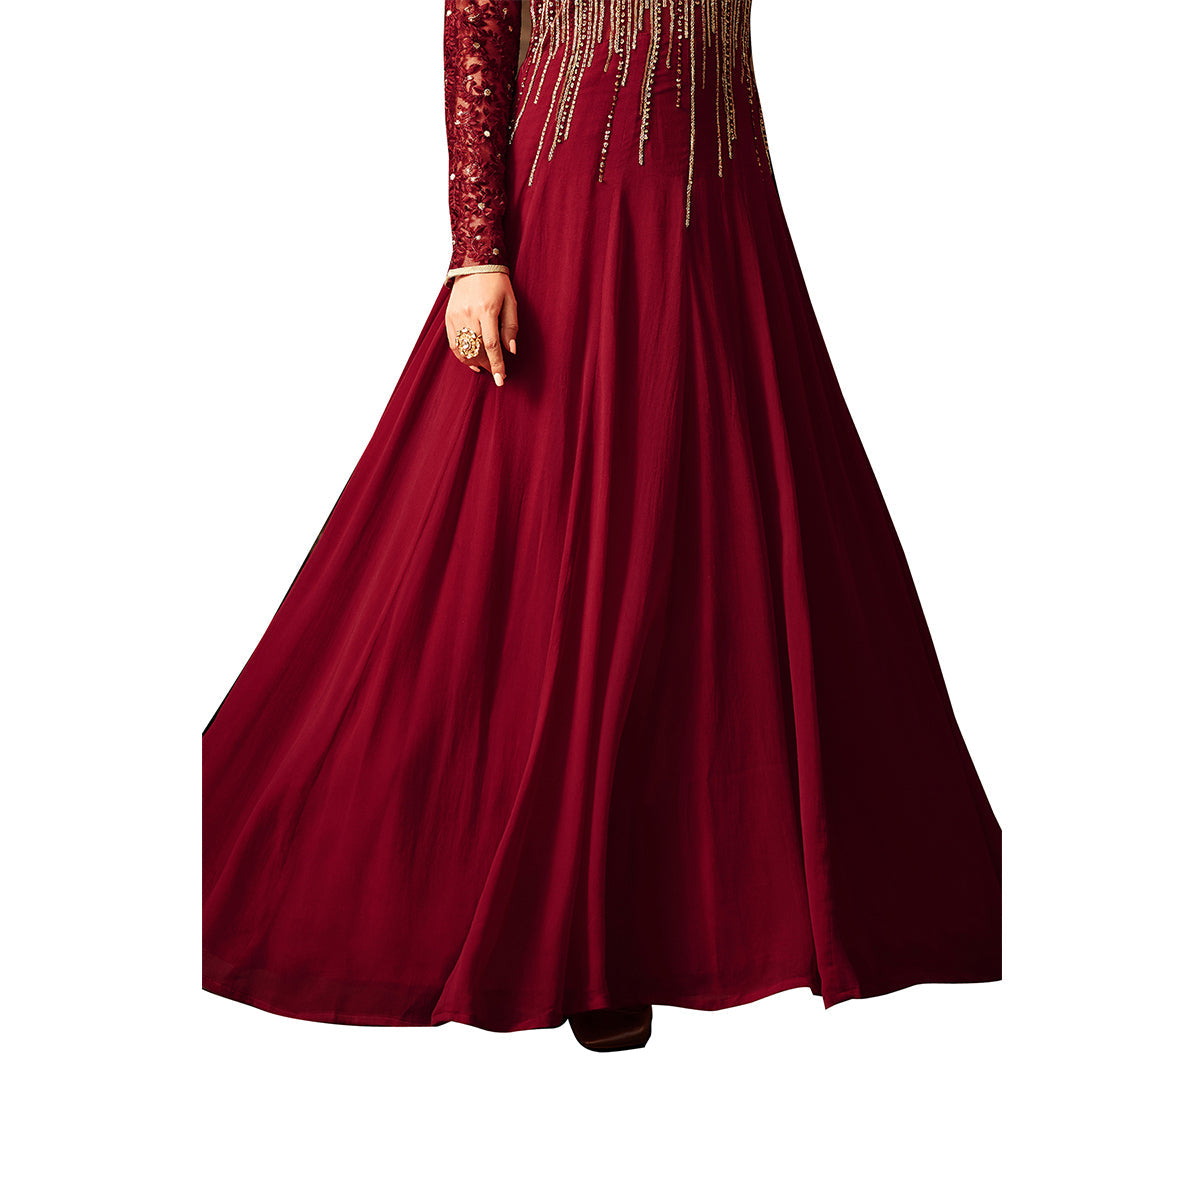 Shafnufab Red Embroidered Semi-Stitched Anarkali Suit